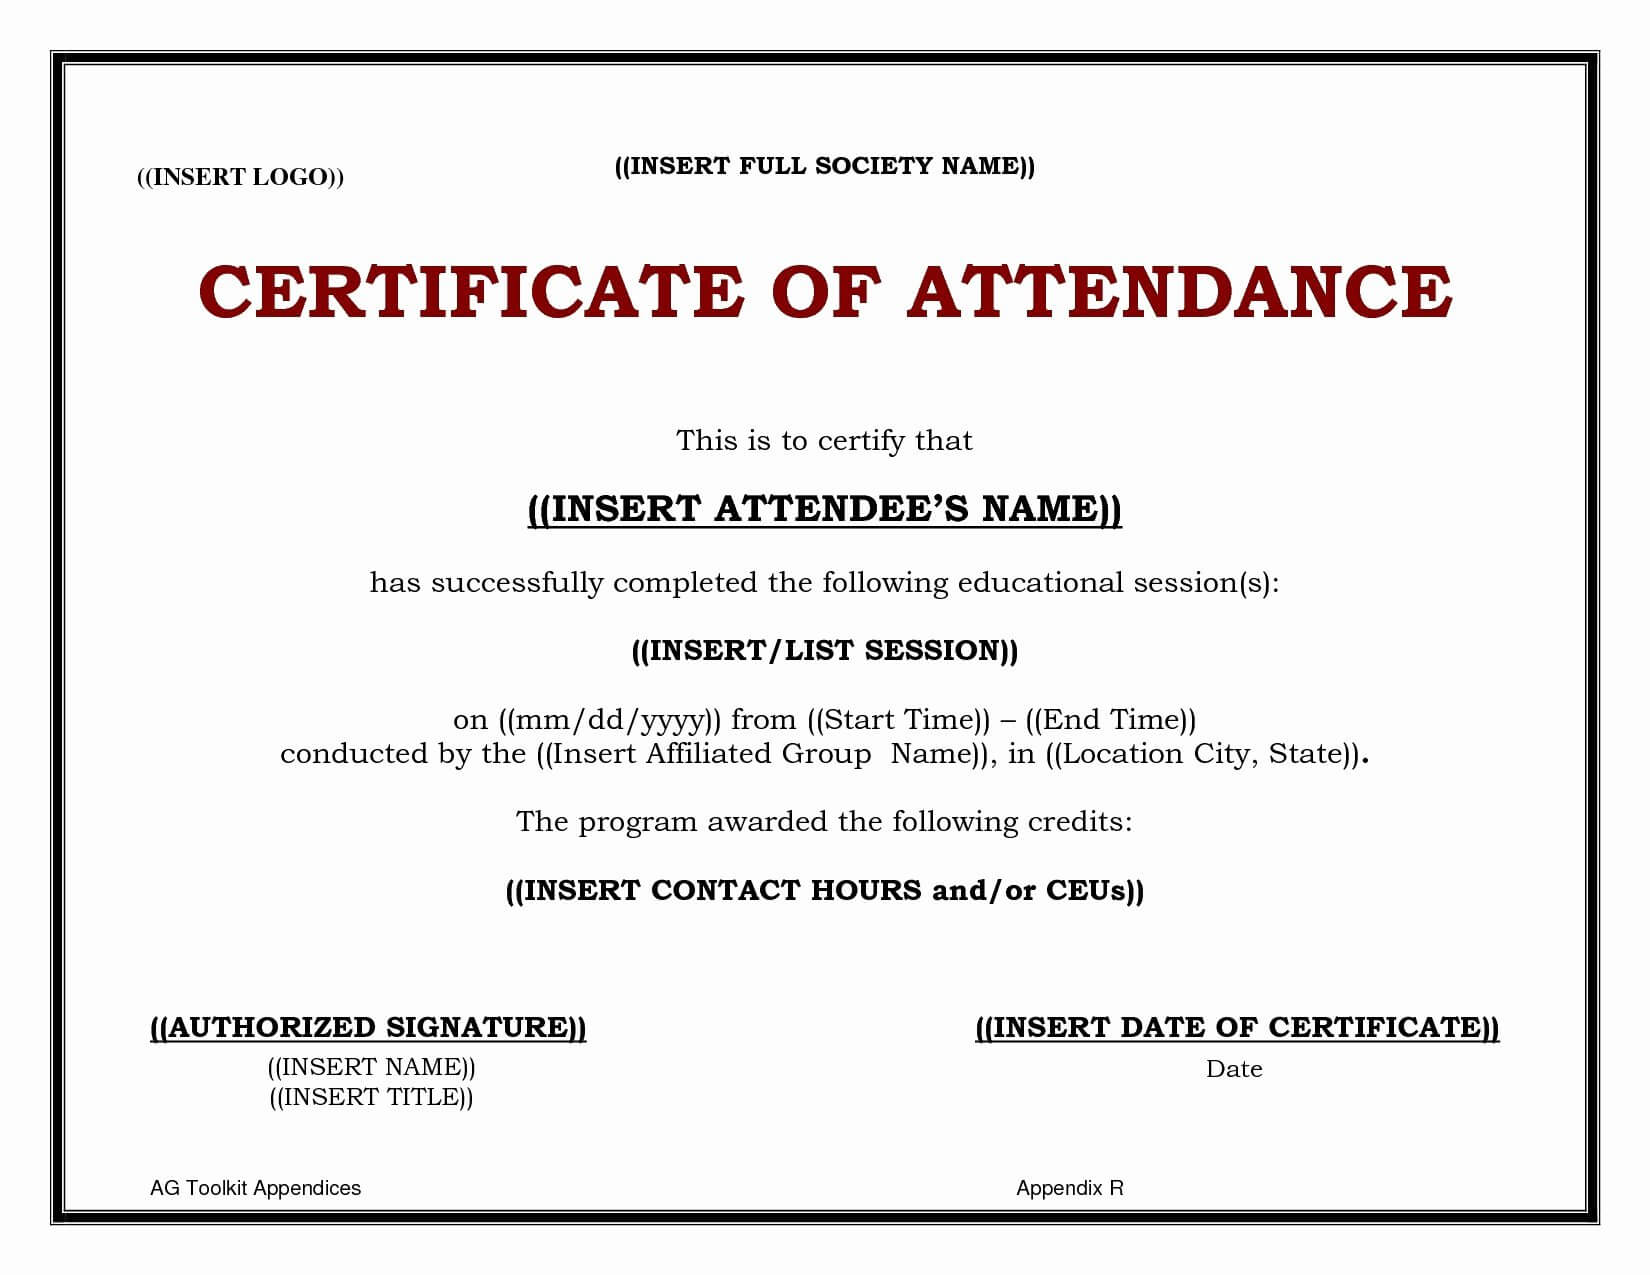 30 Ceu Certificate Of Attendance Template | Pryncepality Regarding Conference Participation Certificate Template